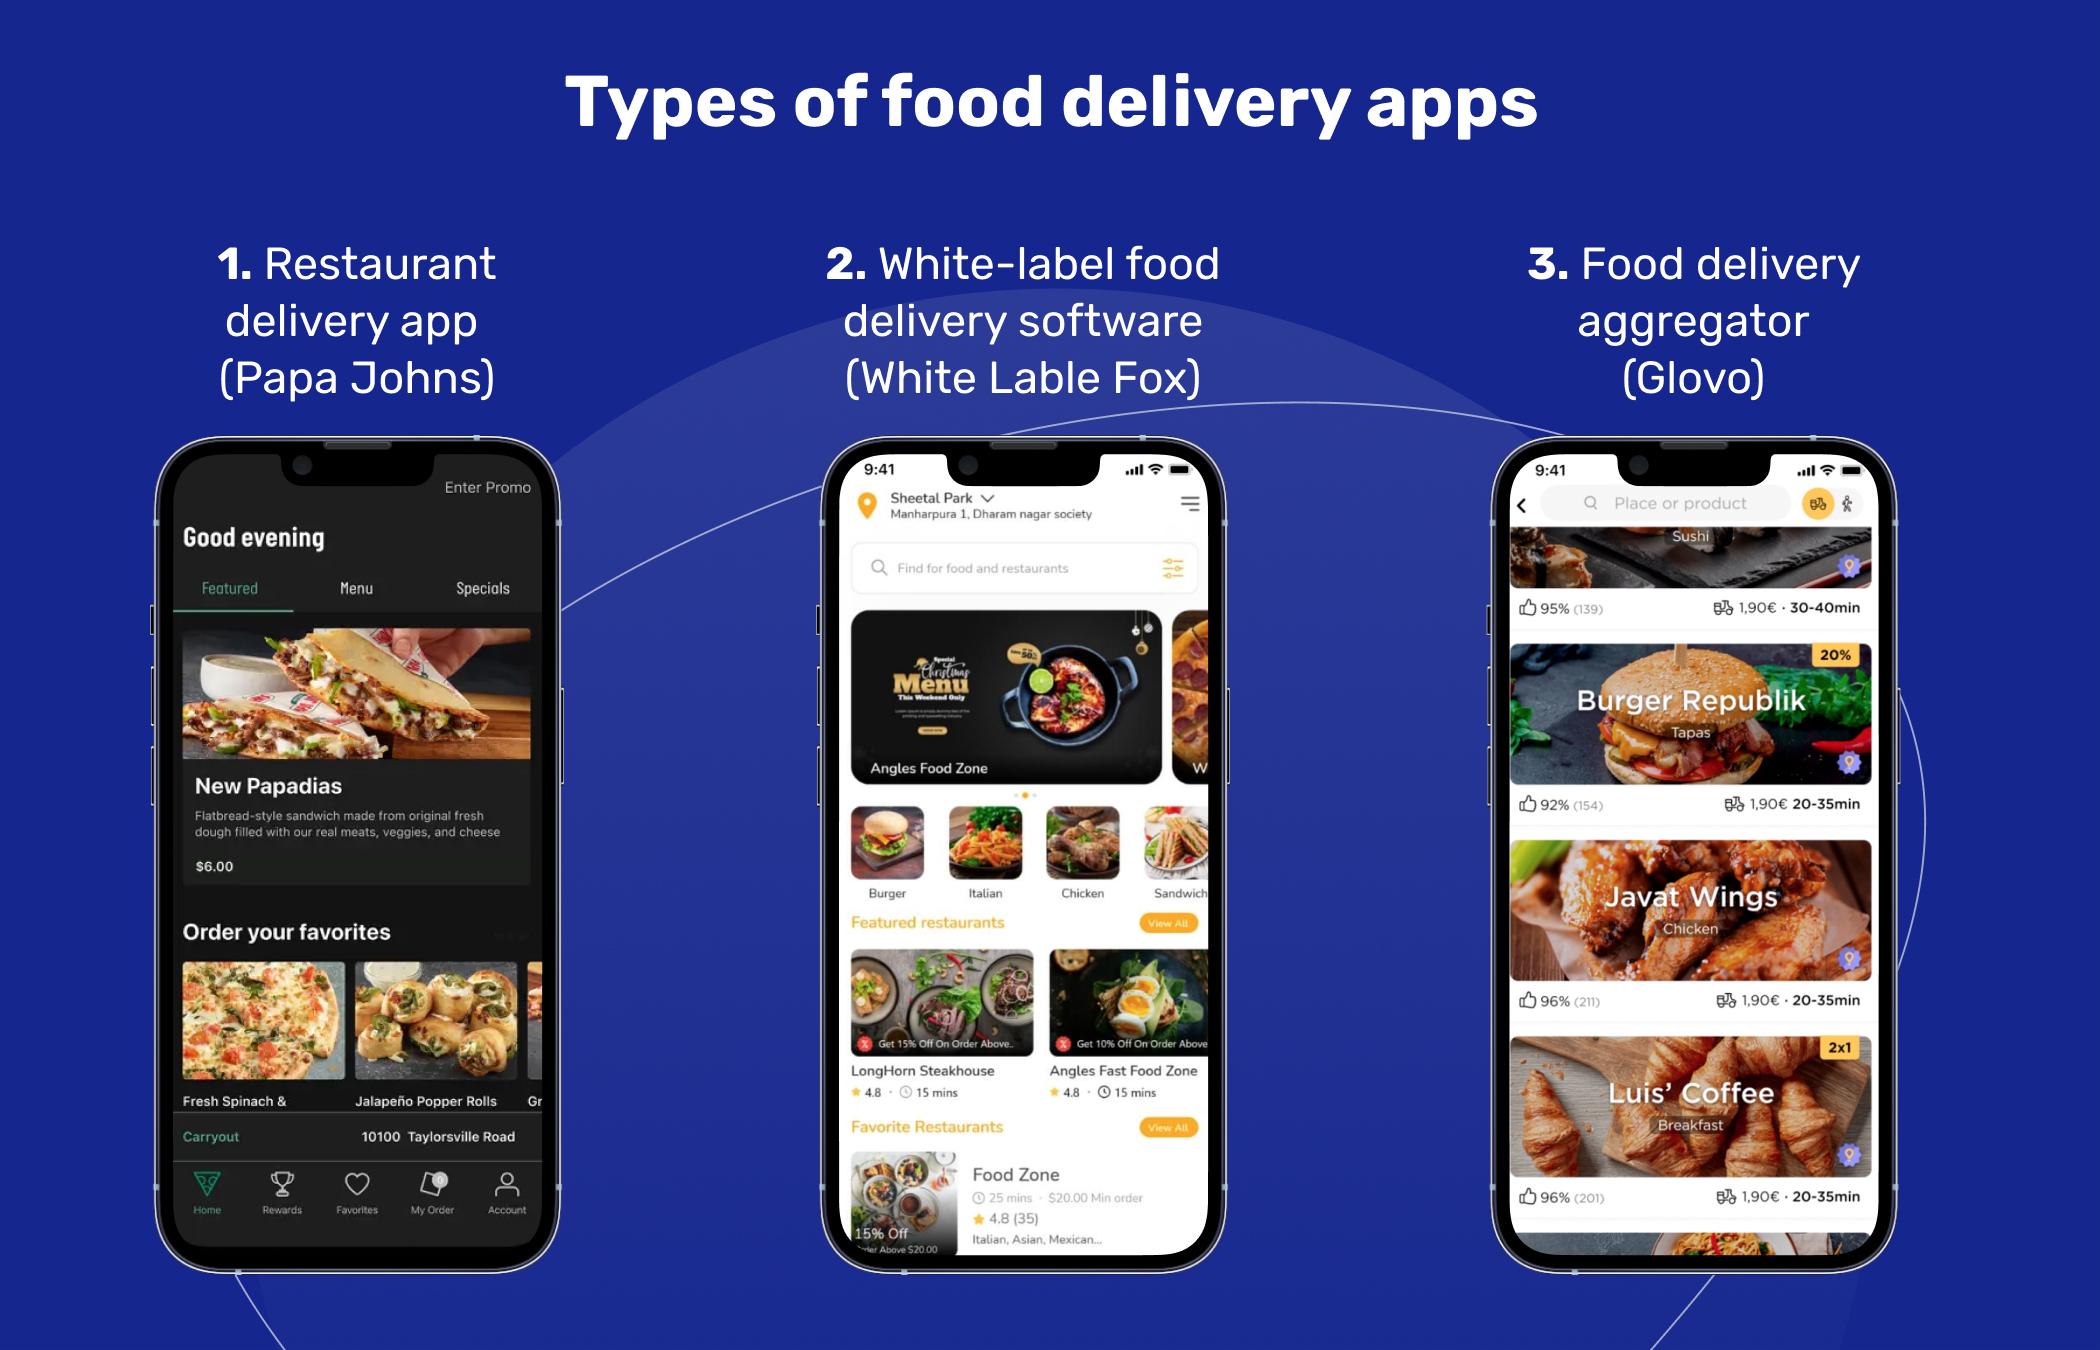 Food delivery app business models